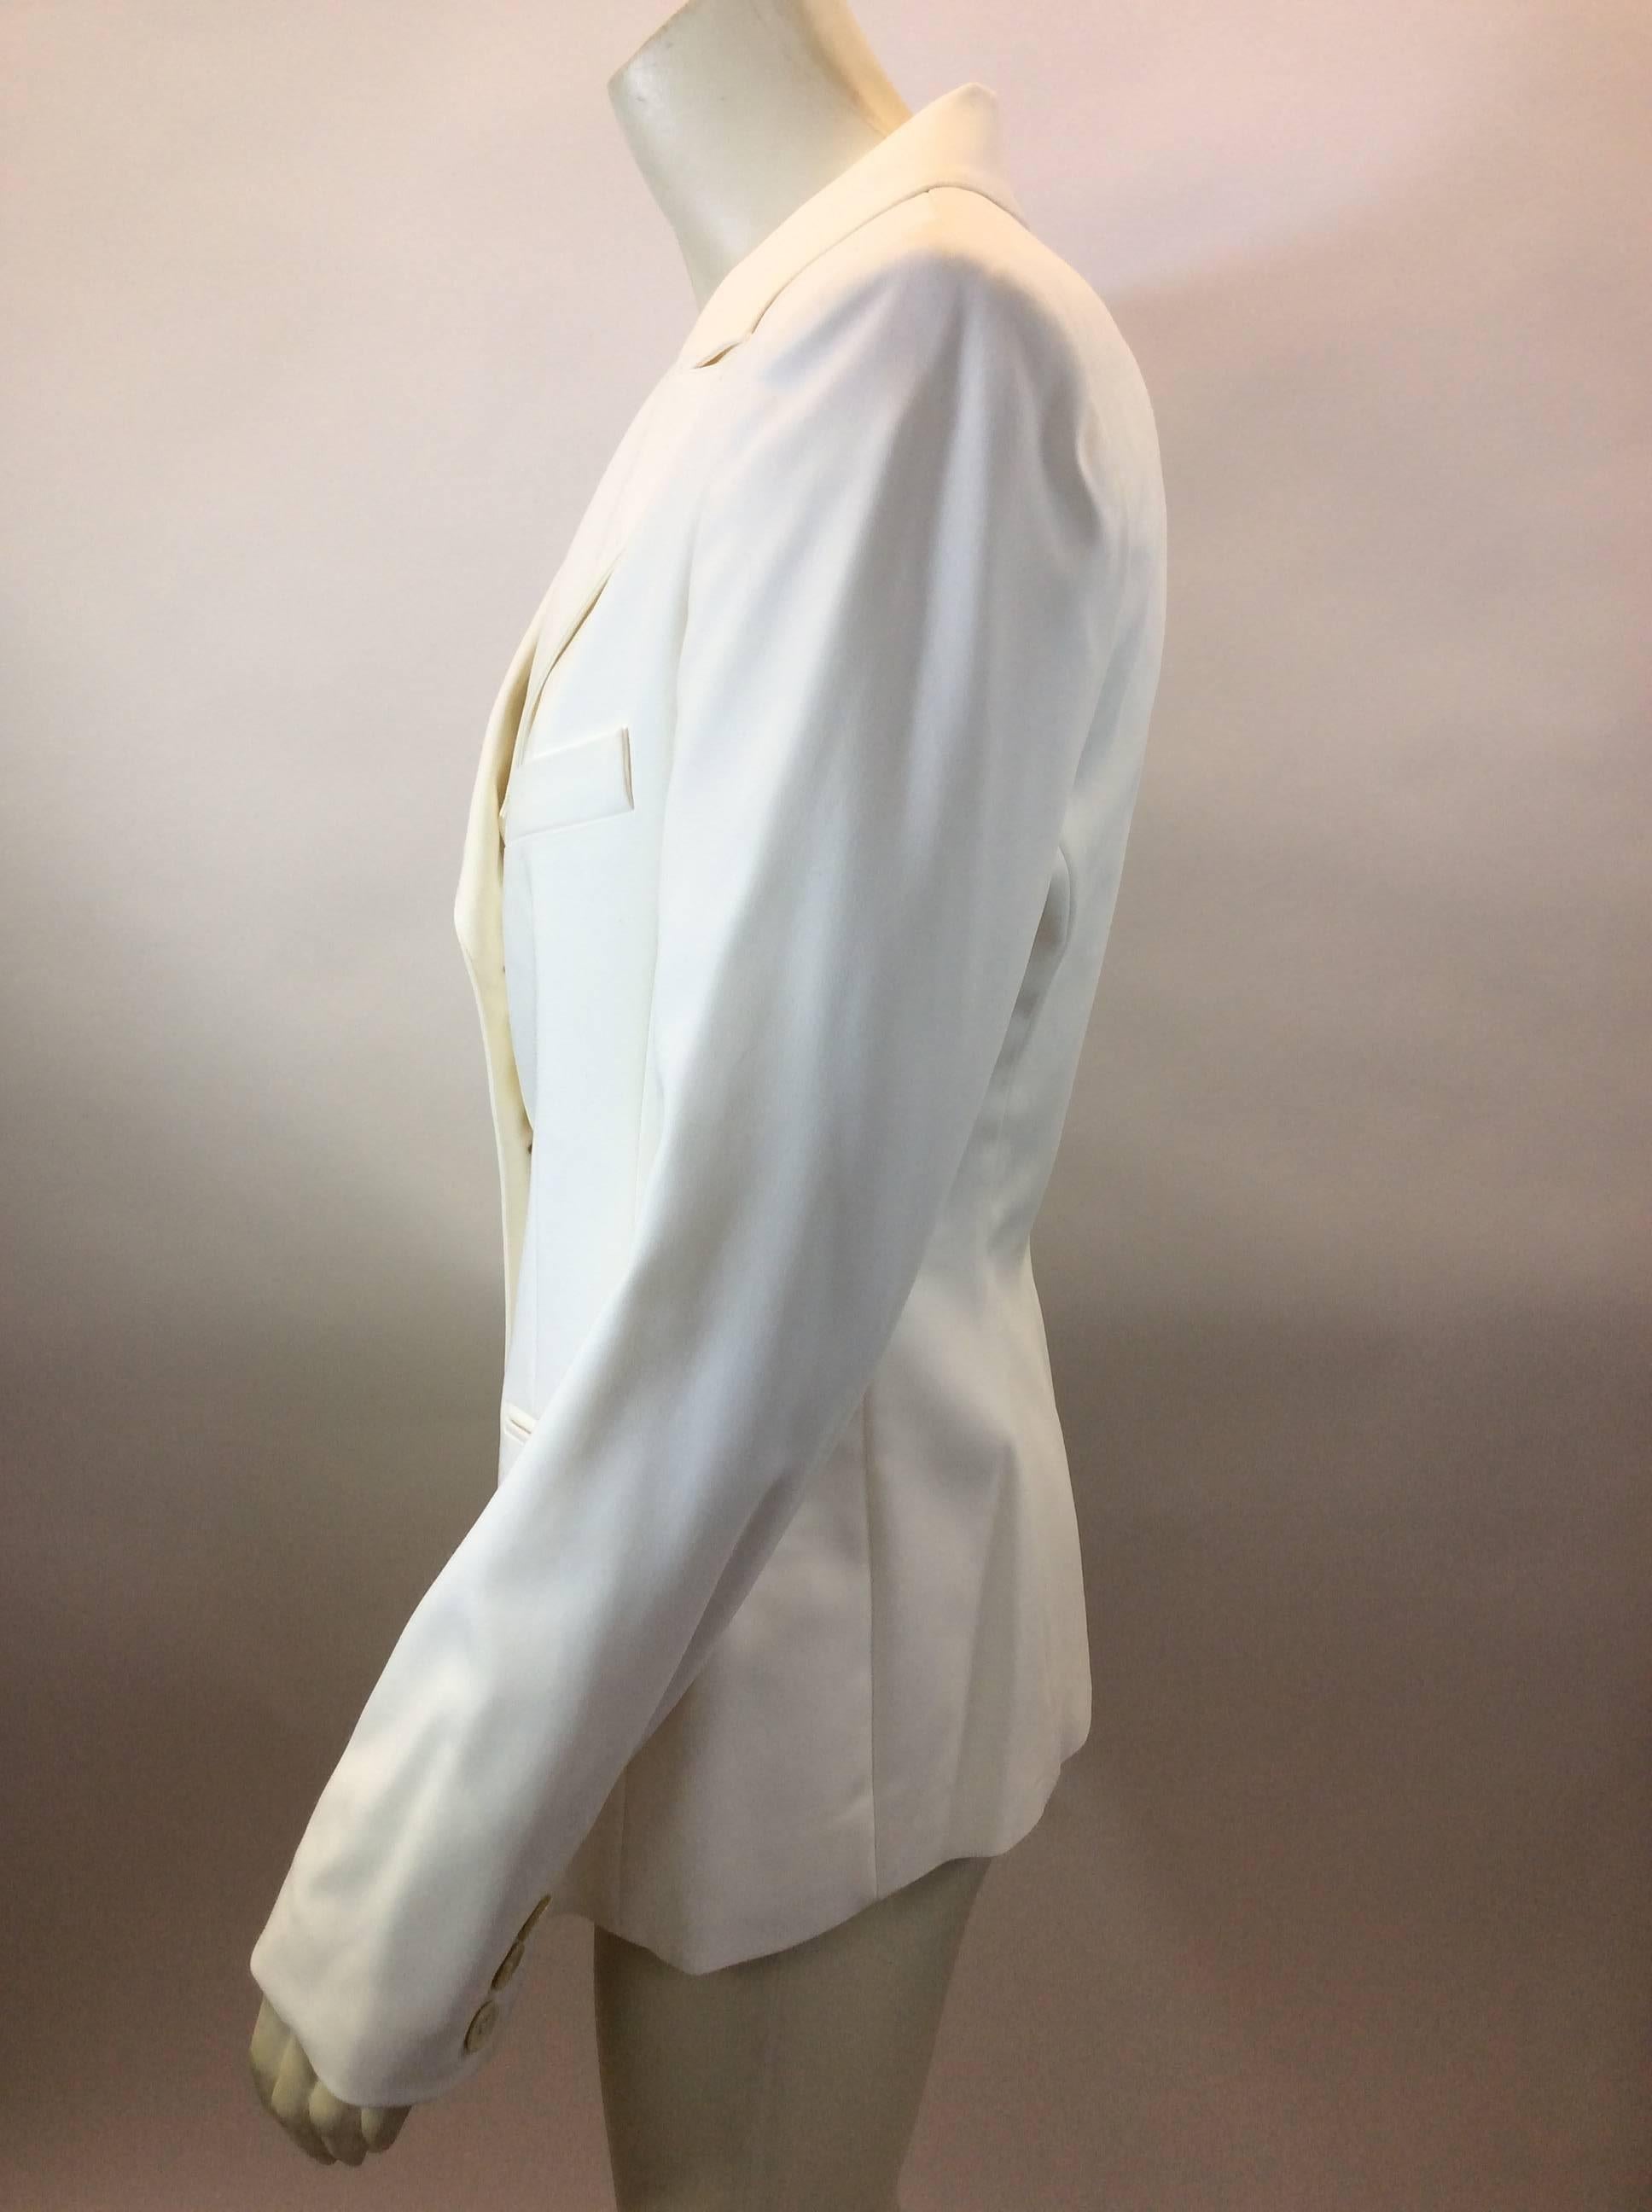 Donna Karan White Blazer NWT
Size 6 
$350
Made in Italy
Length 26